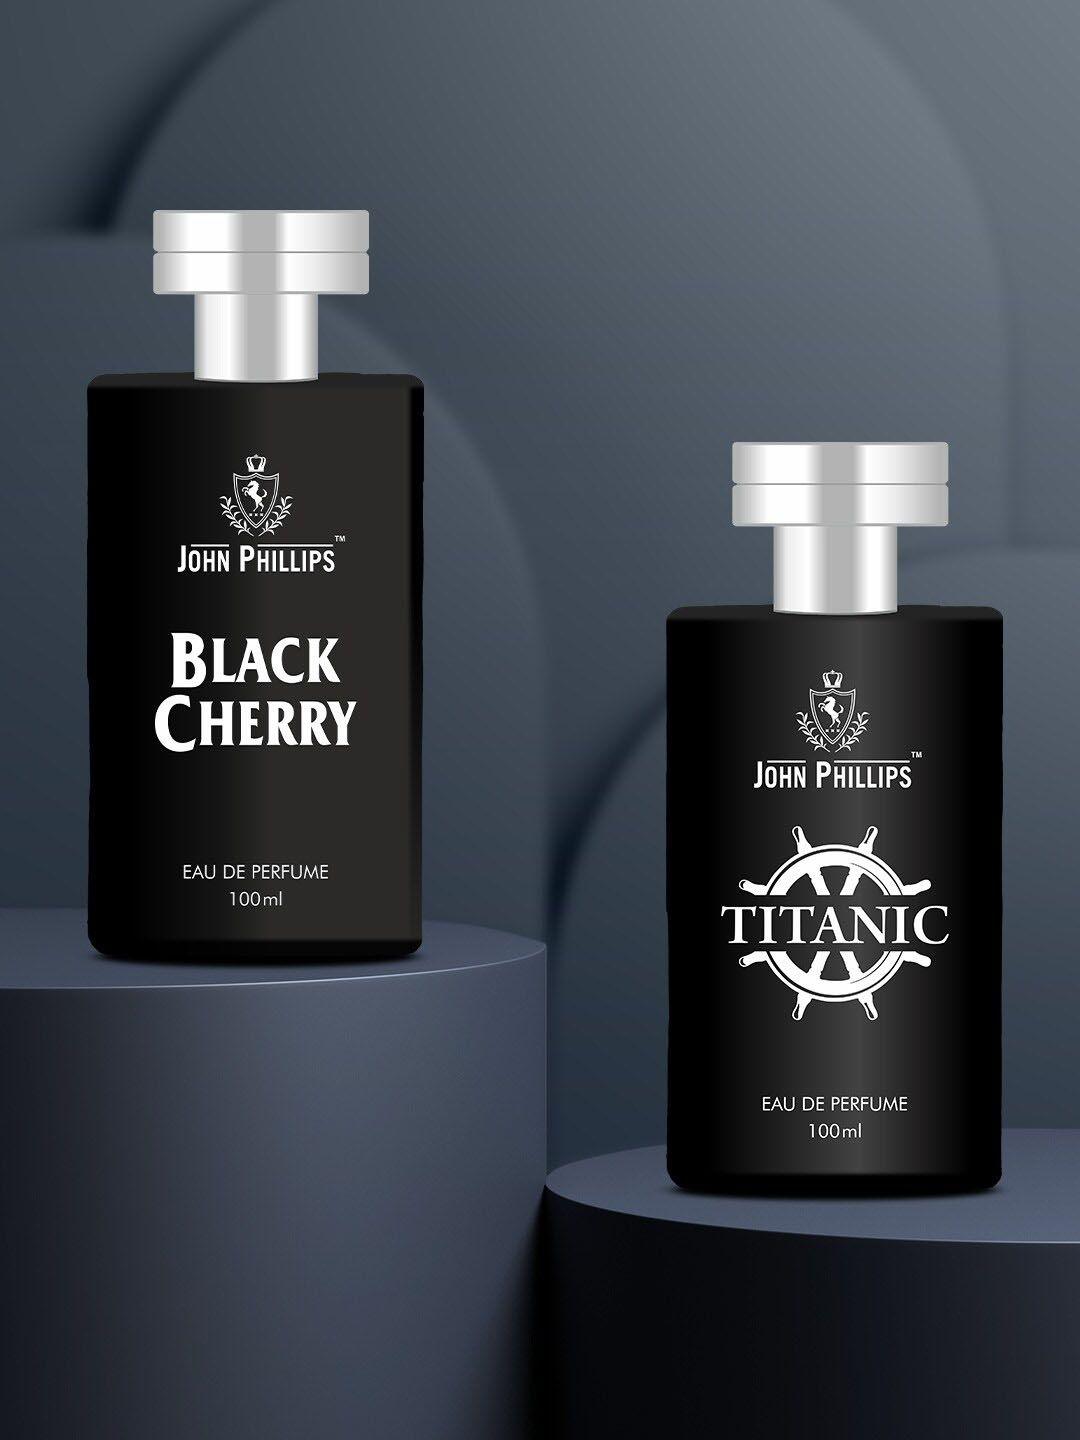 john phillips set of 2 luxury eau de perfumes - black cherry - titanic 100ml each